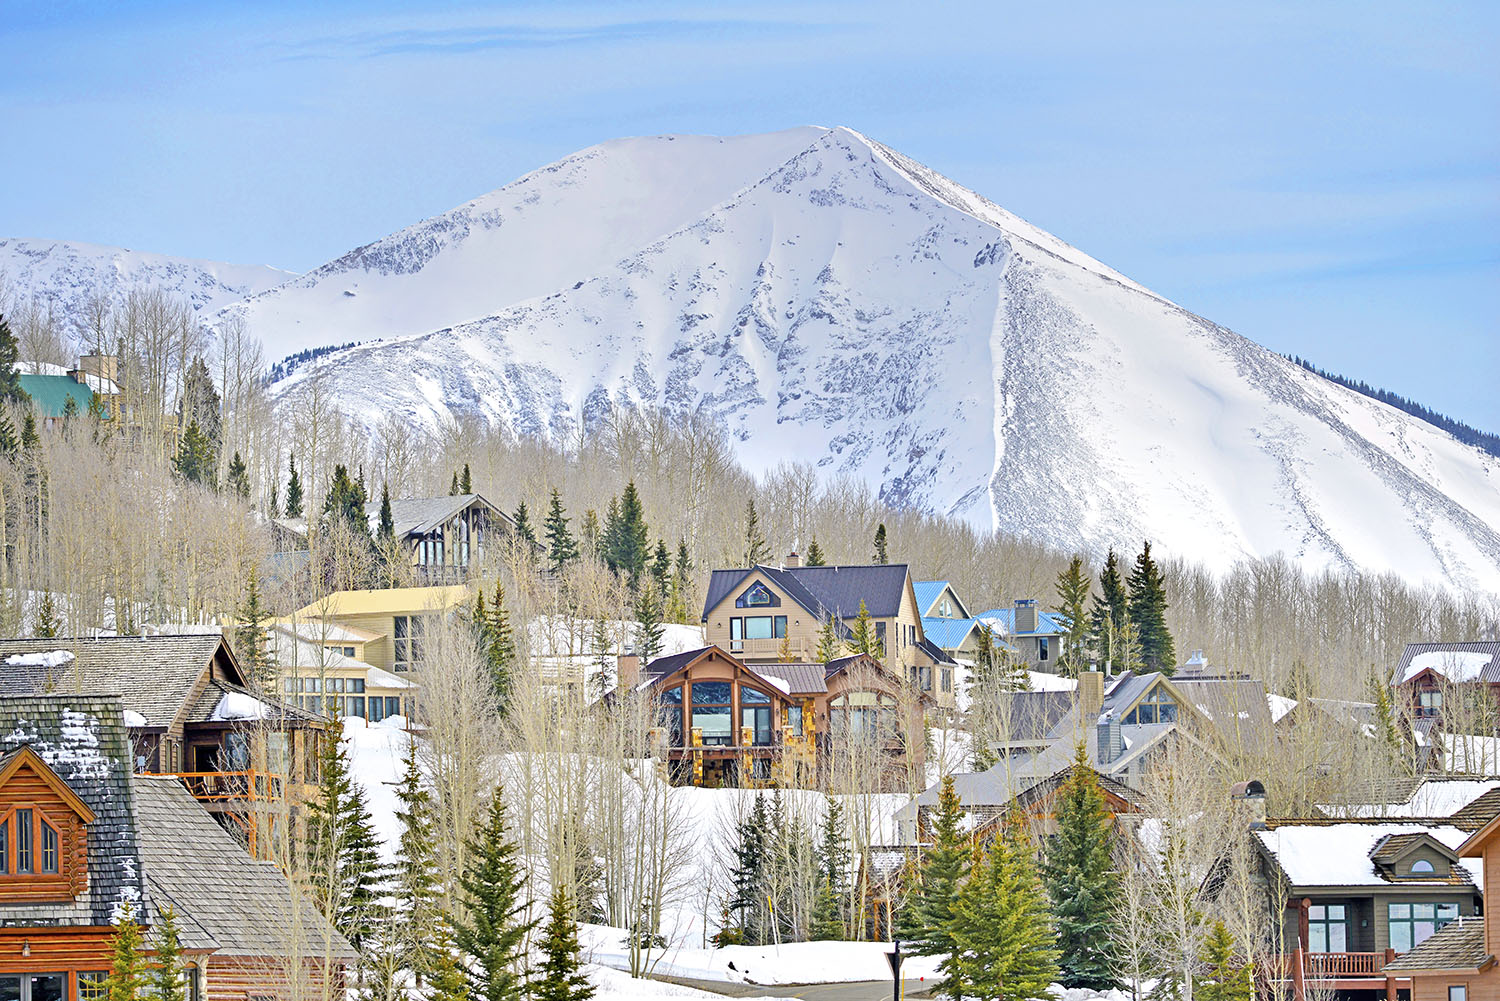 Mount_Crested_Butte_Winter_Snow_Ski_Town_Colorado.jpg